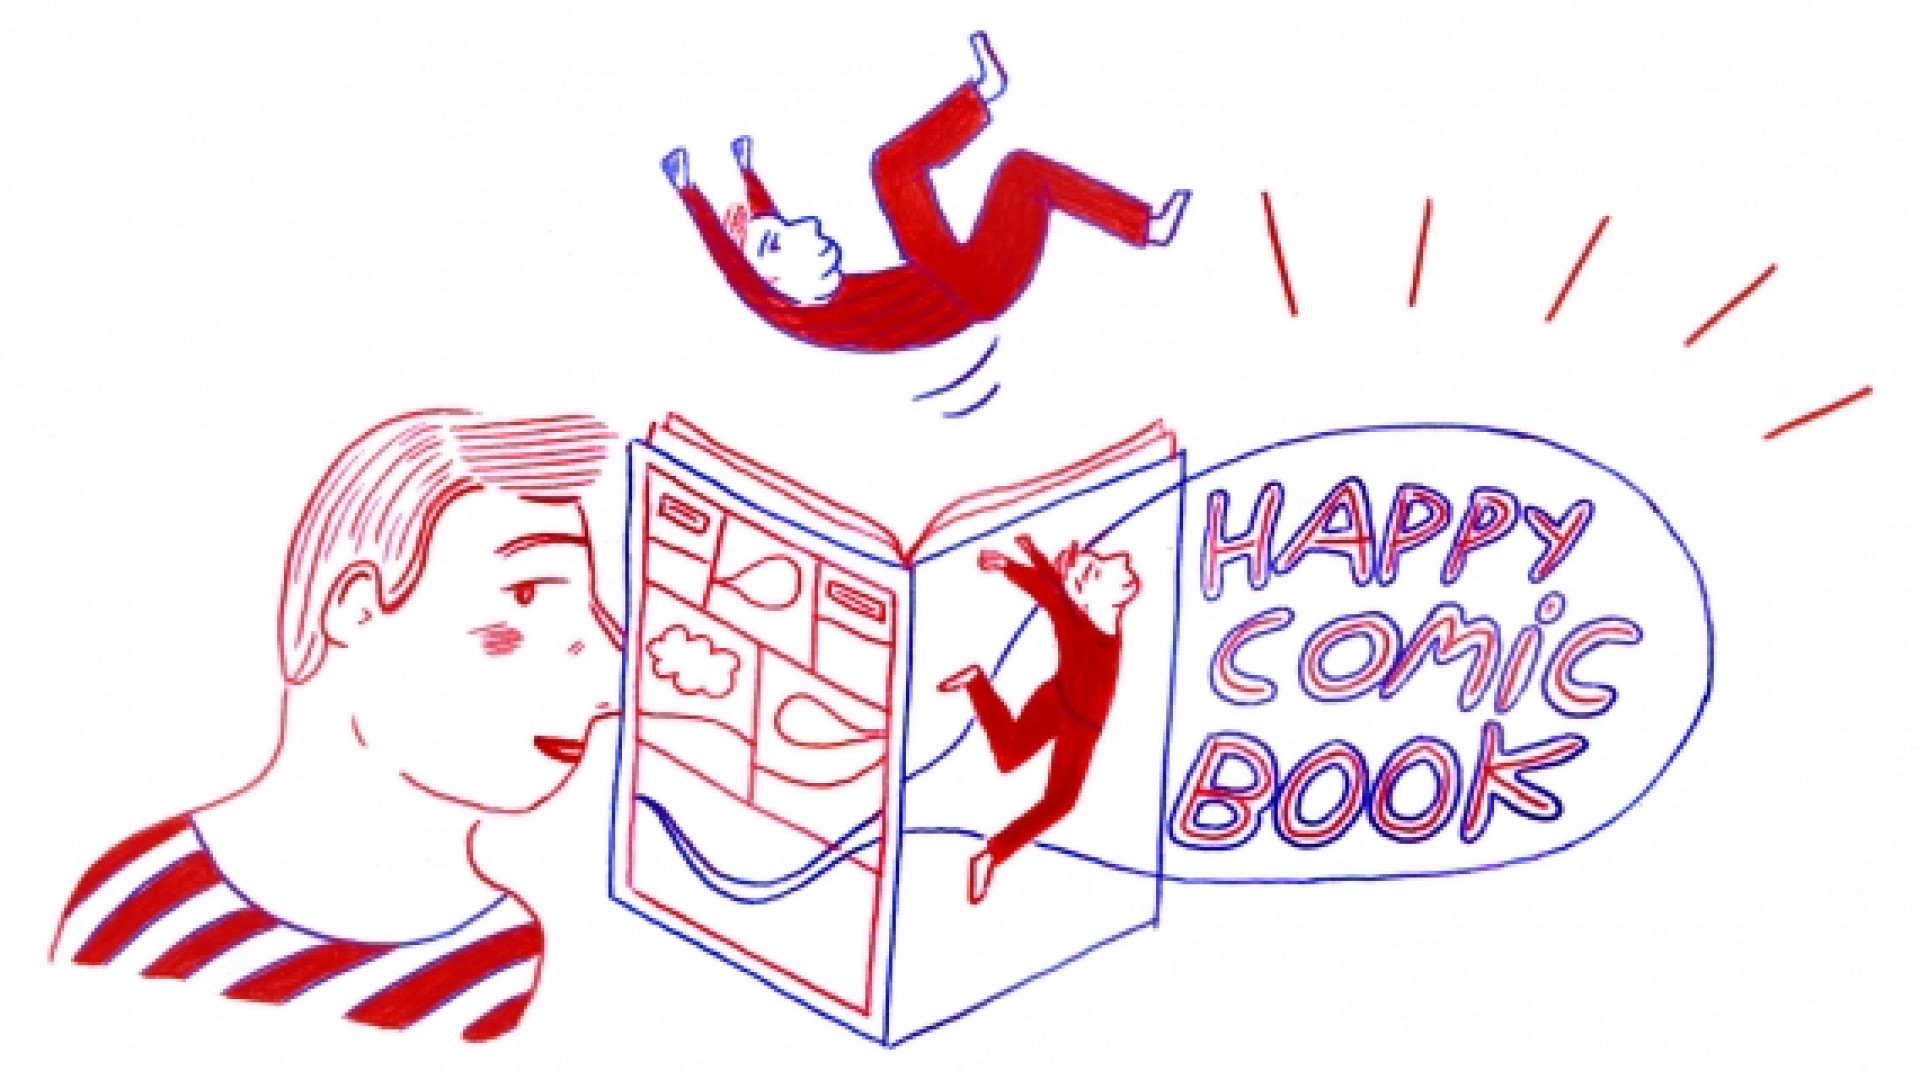 Happy comic book